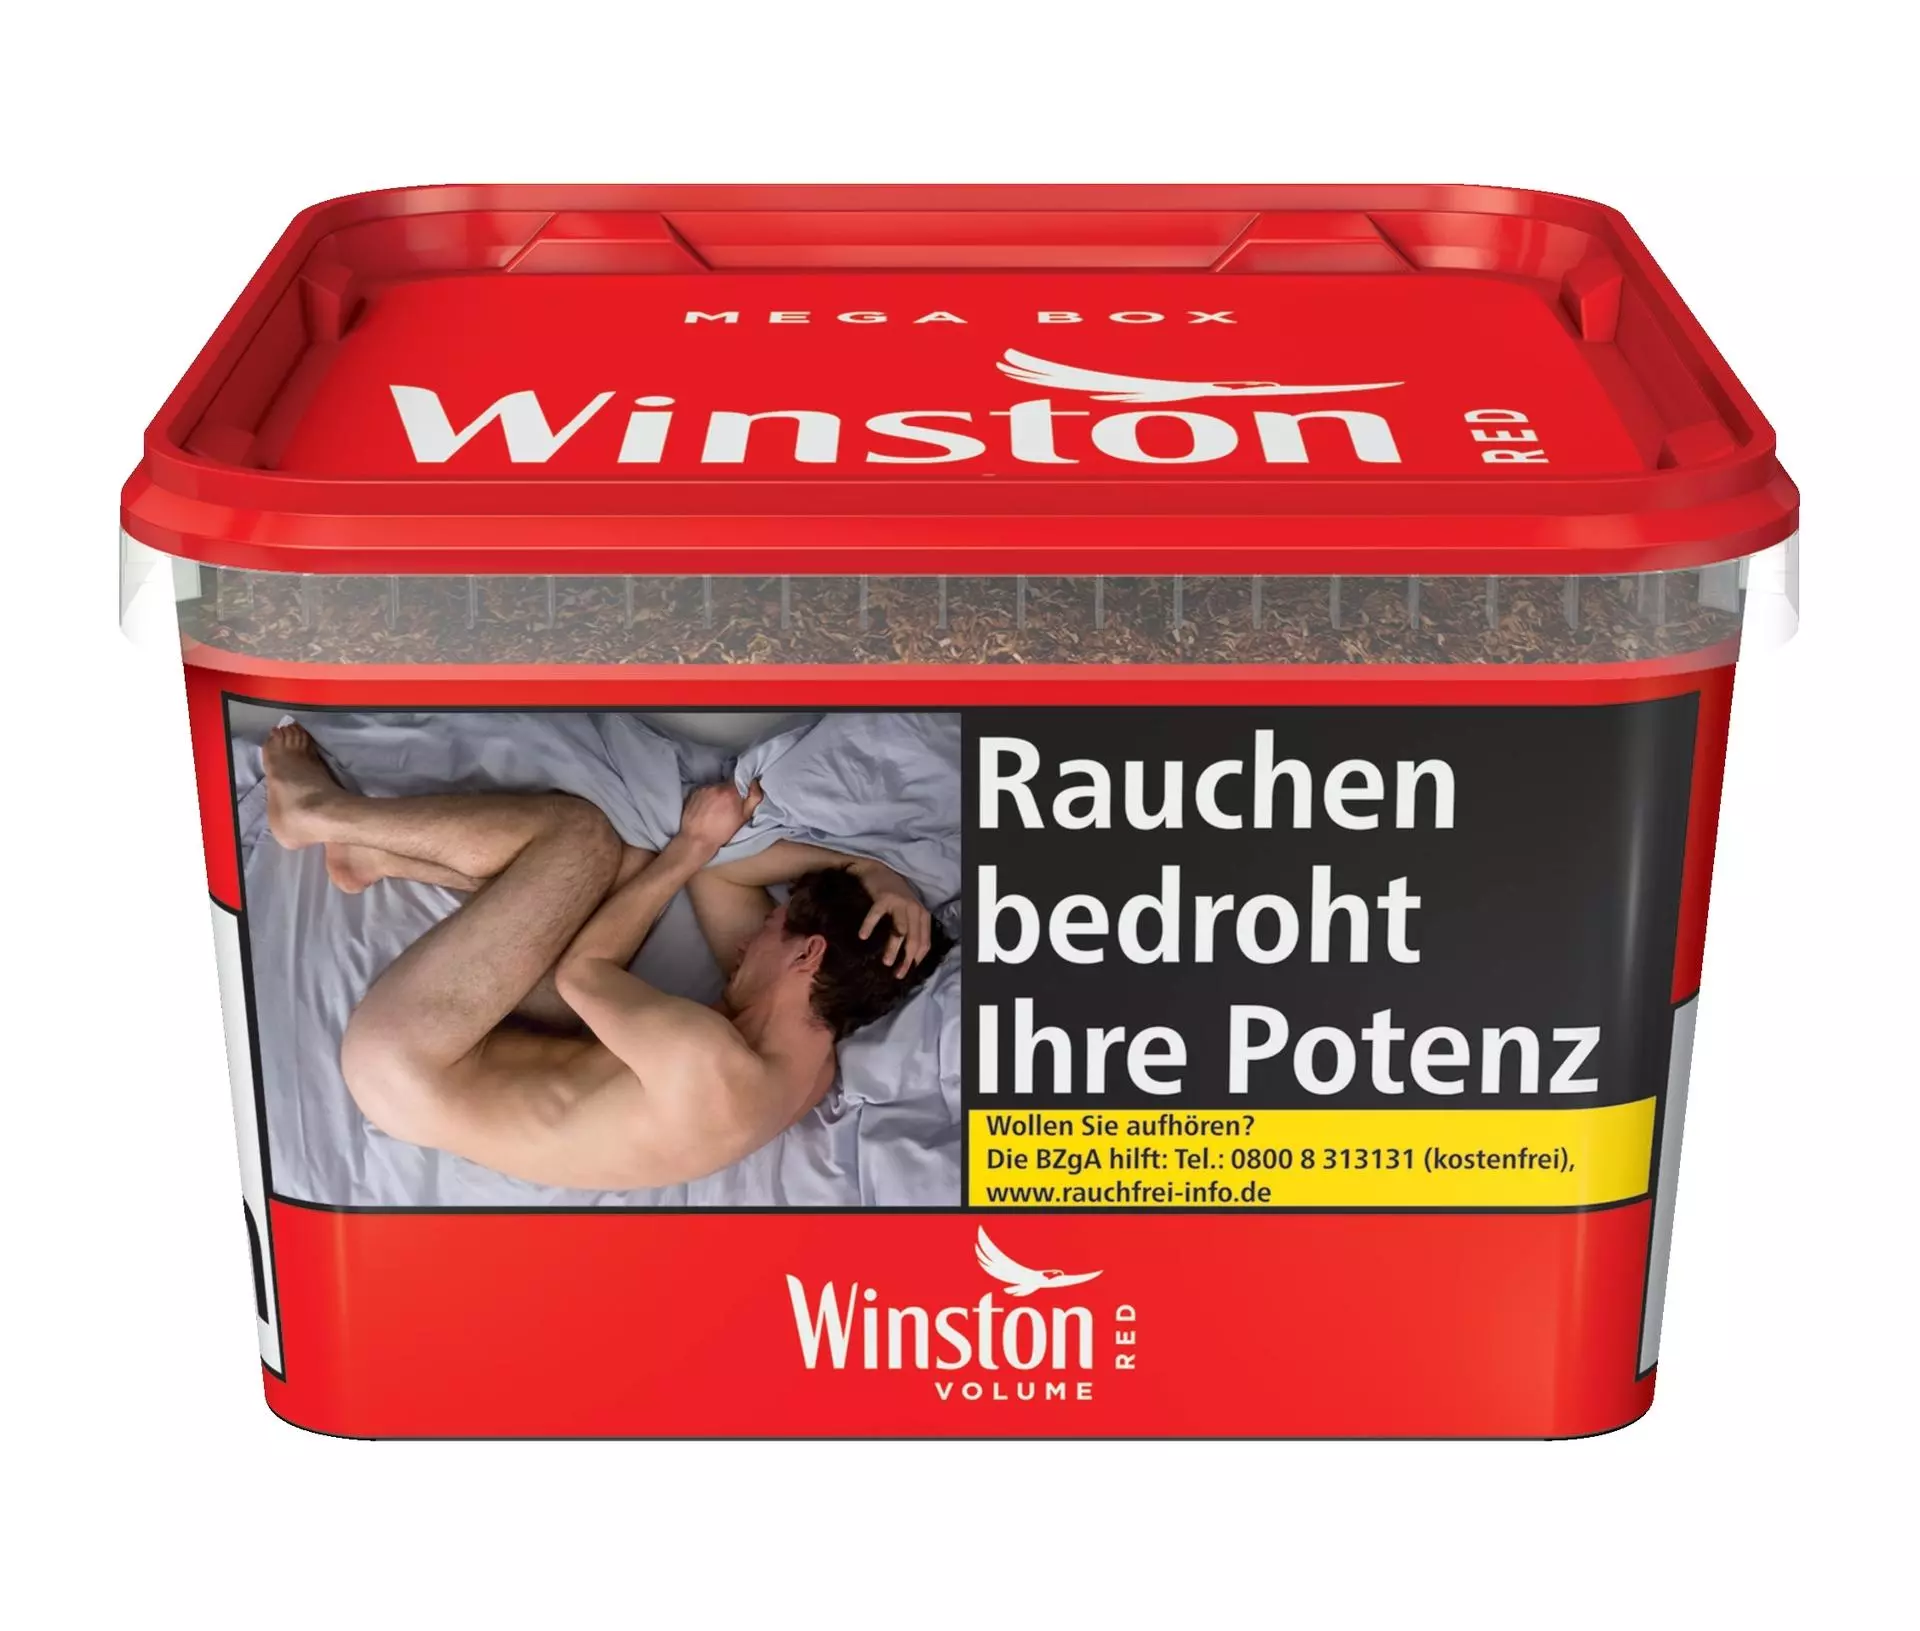 Winston Red Volumentabak Mega Box 1 x 140g Tabak